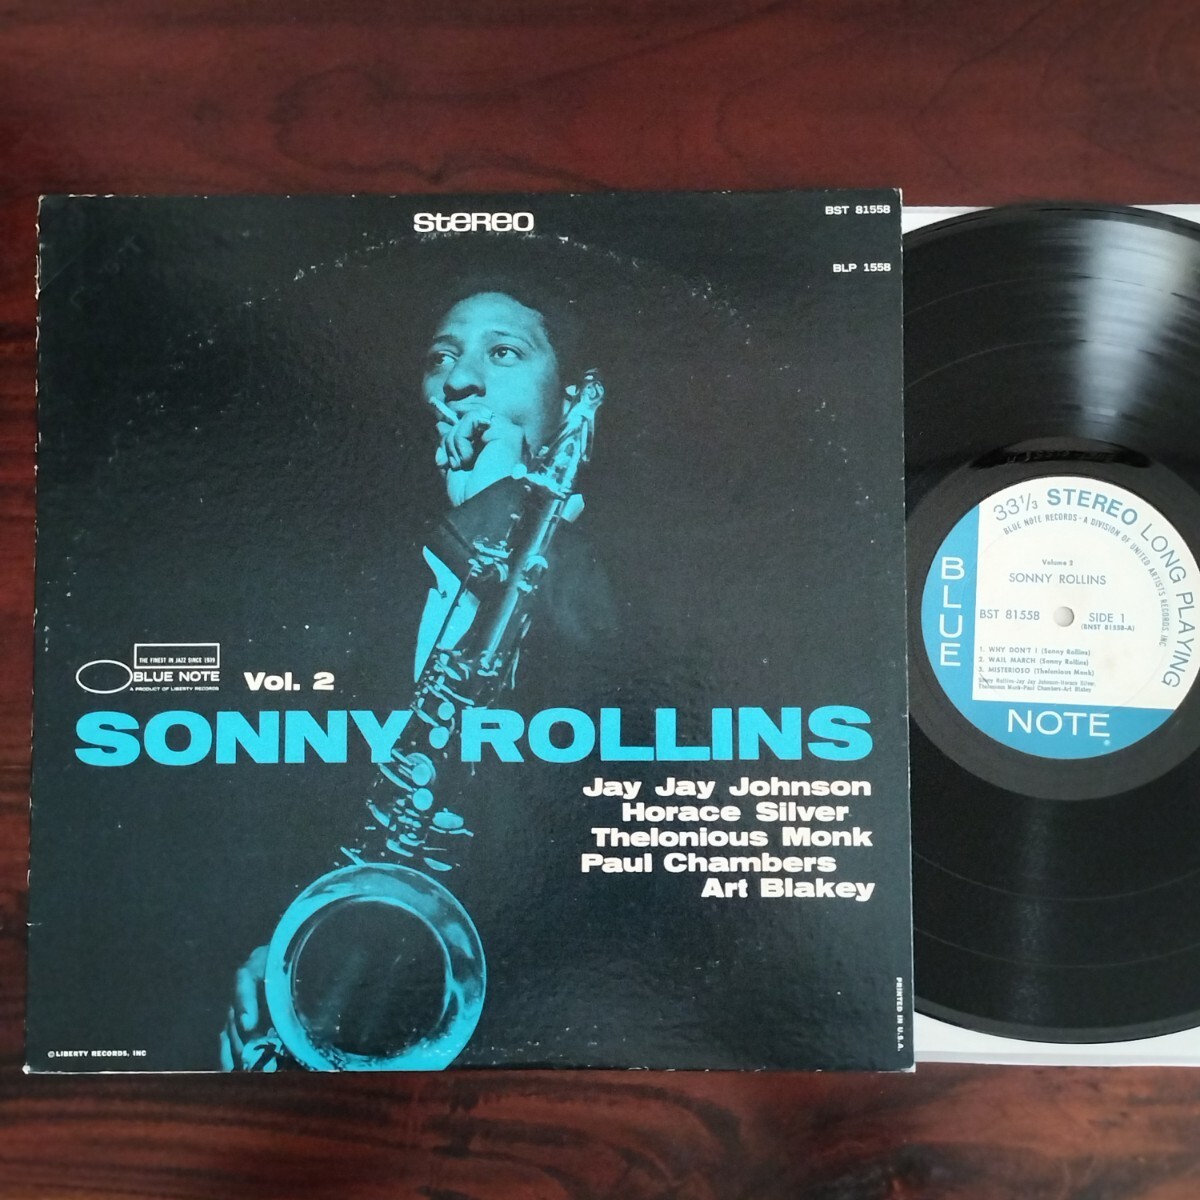 【BLP1558/BST81558】Sonny Rollins Vol. 2 / ソニー・ロリンズ / BLUE NOTE / US盤 / LPの画像1